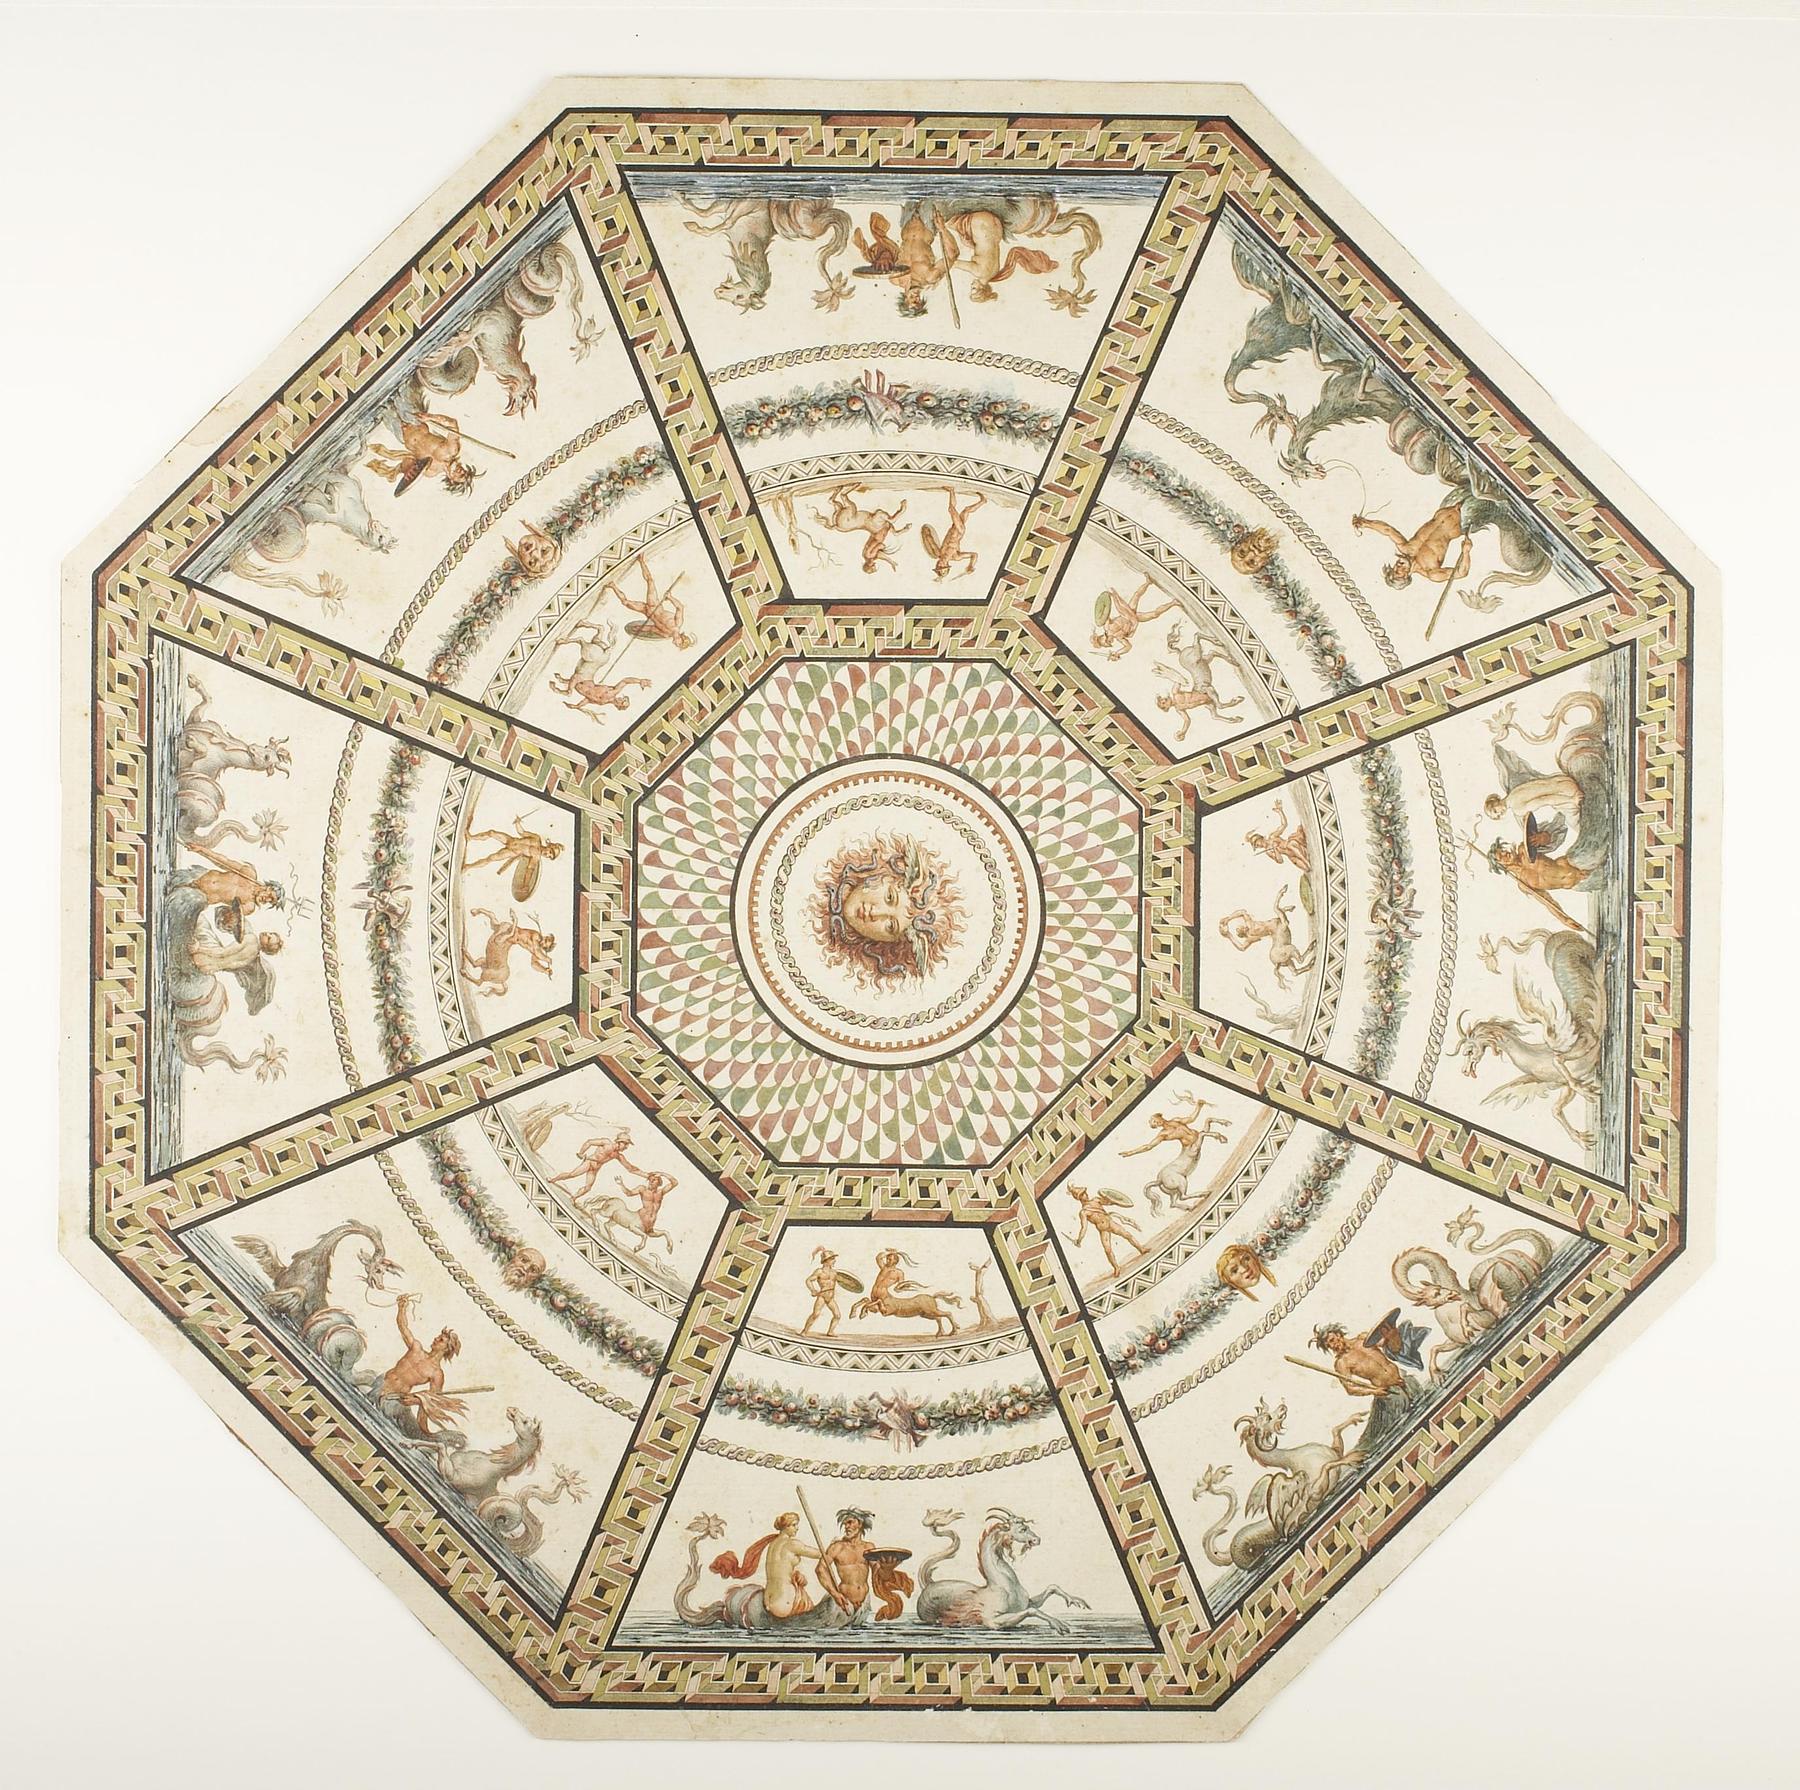 Octagonal Mosaic Floor with a Medusa Head in the Centre, D908